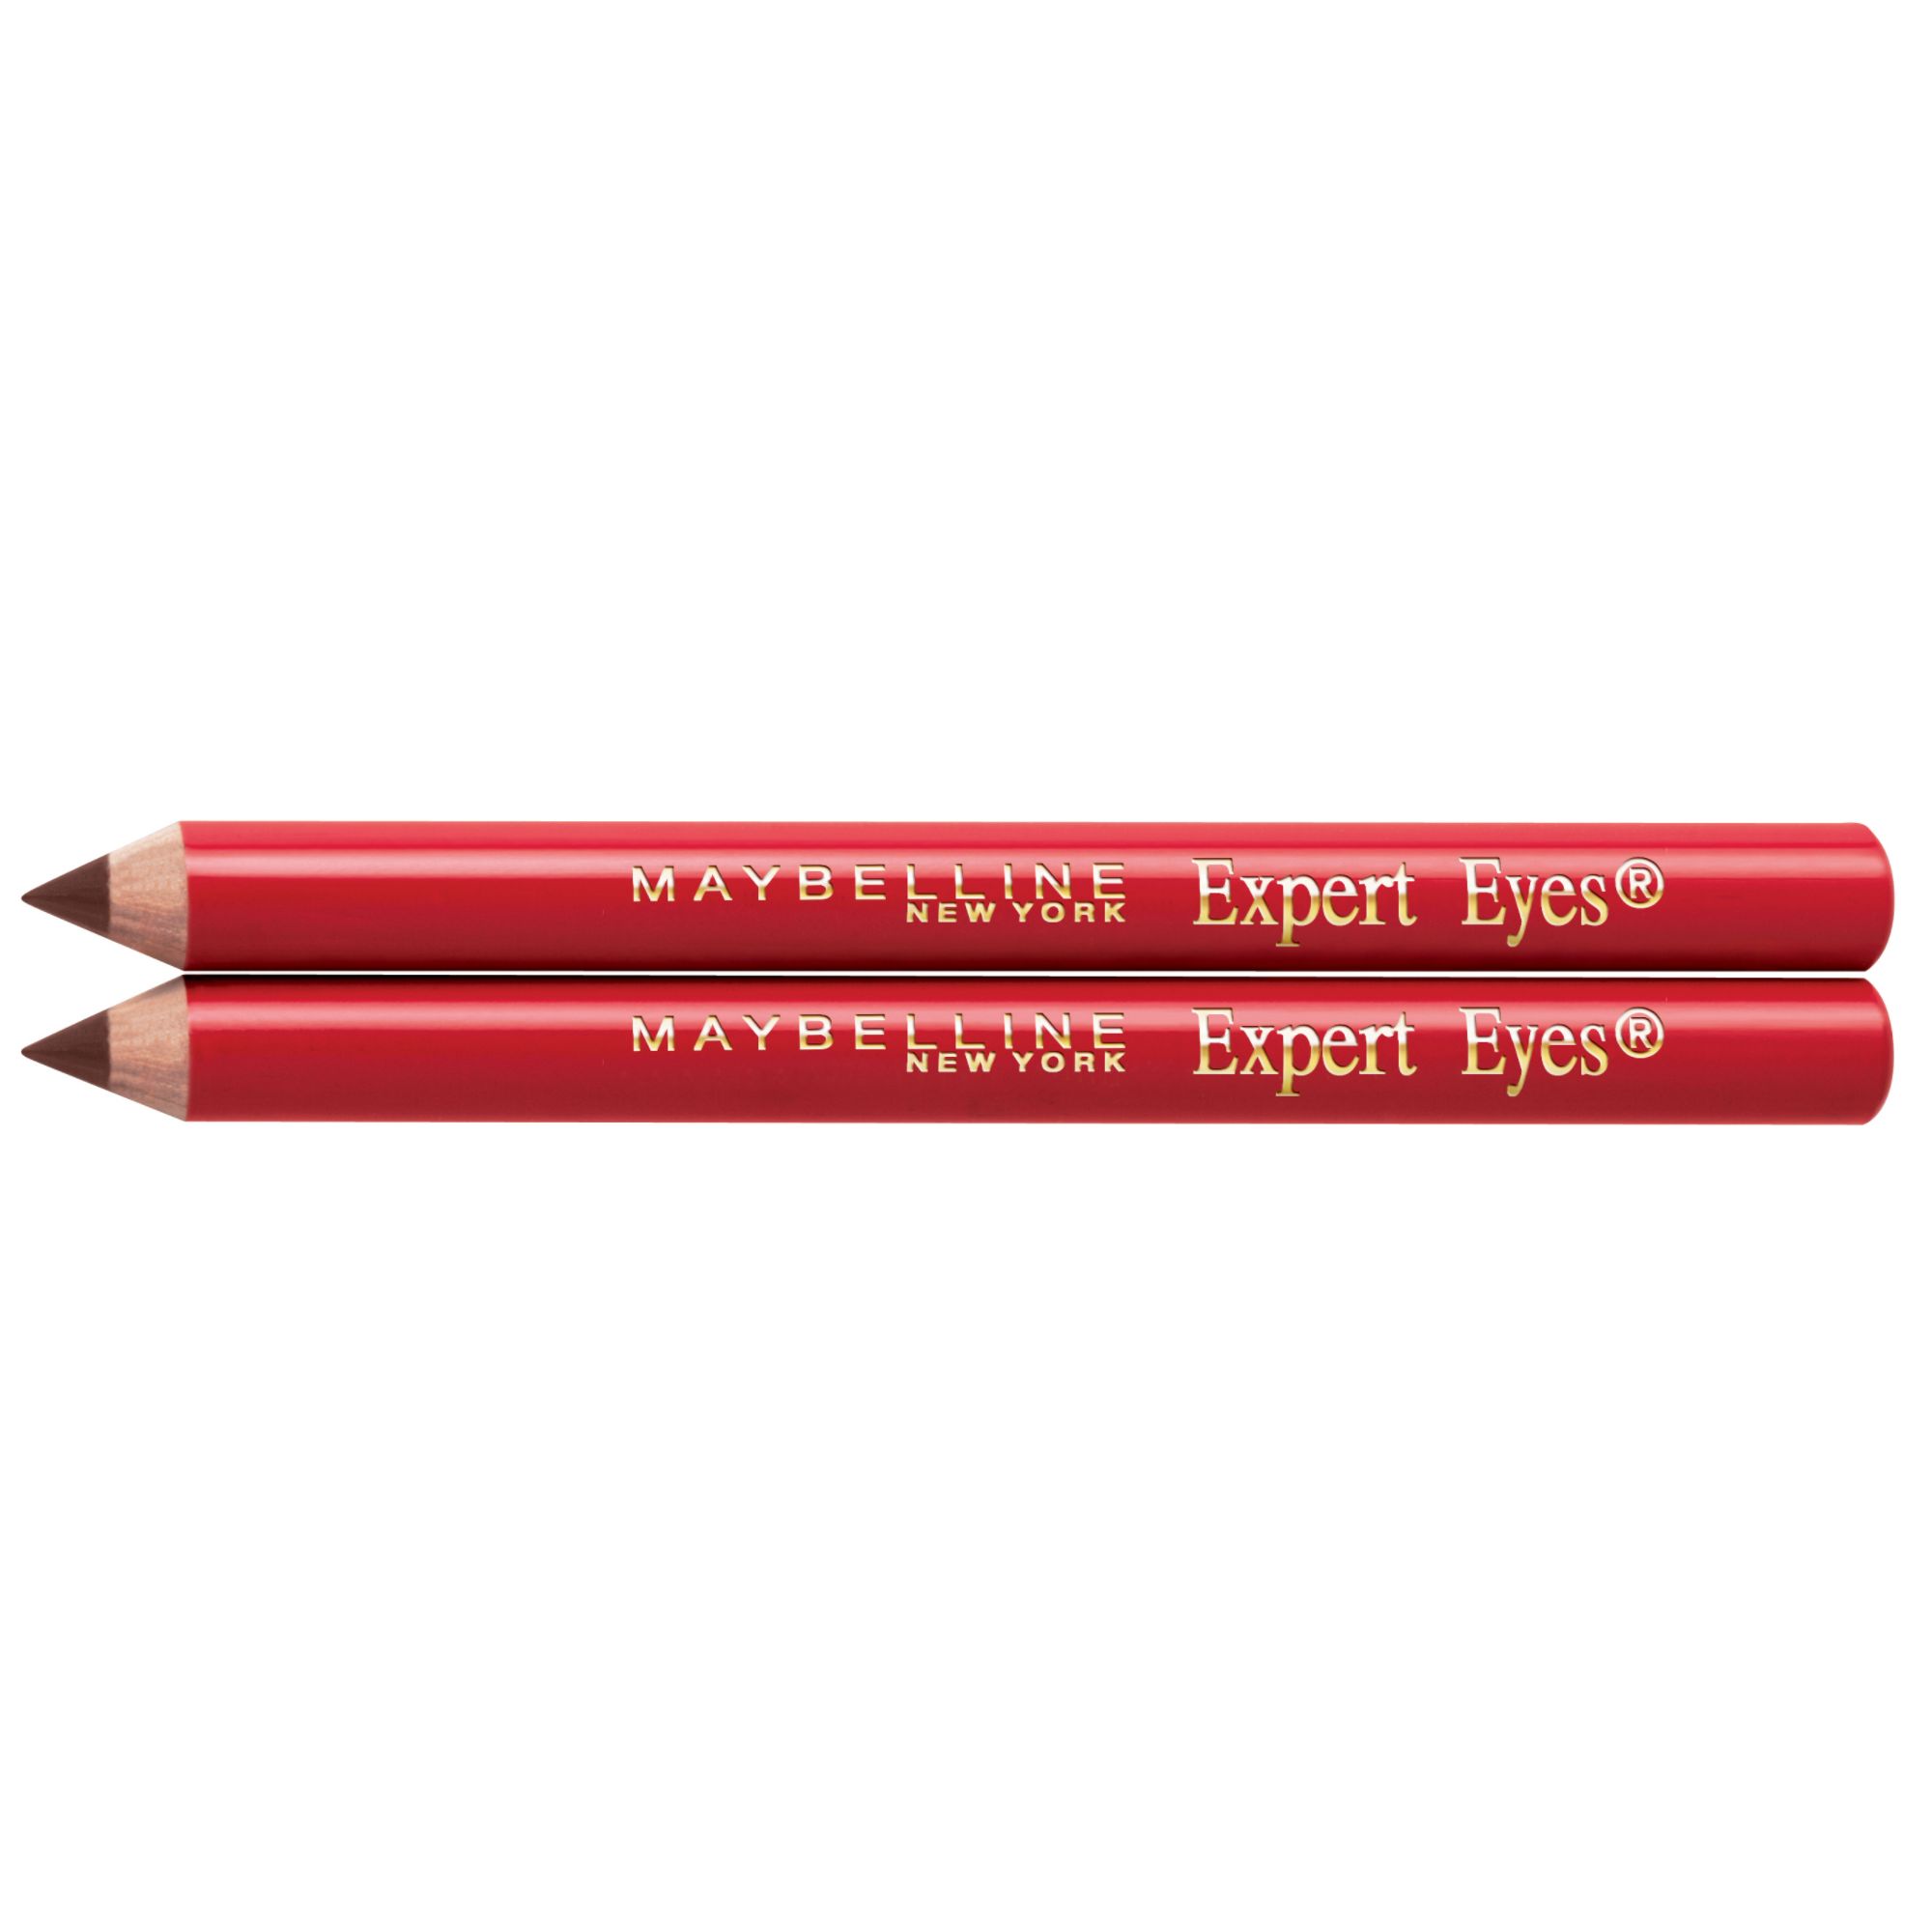 Maybelline New York Expert Eyes Twin Brow & Eye Pencils